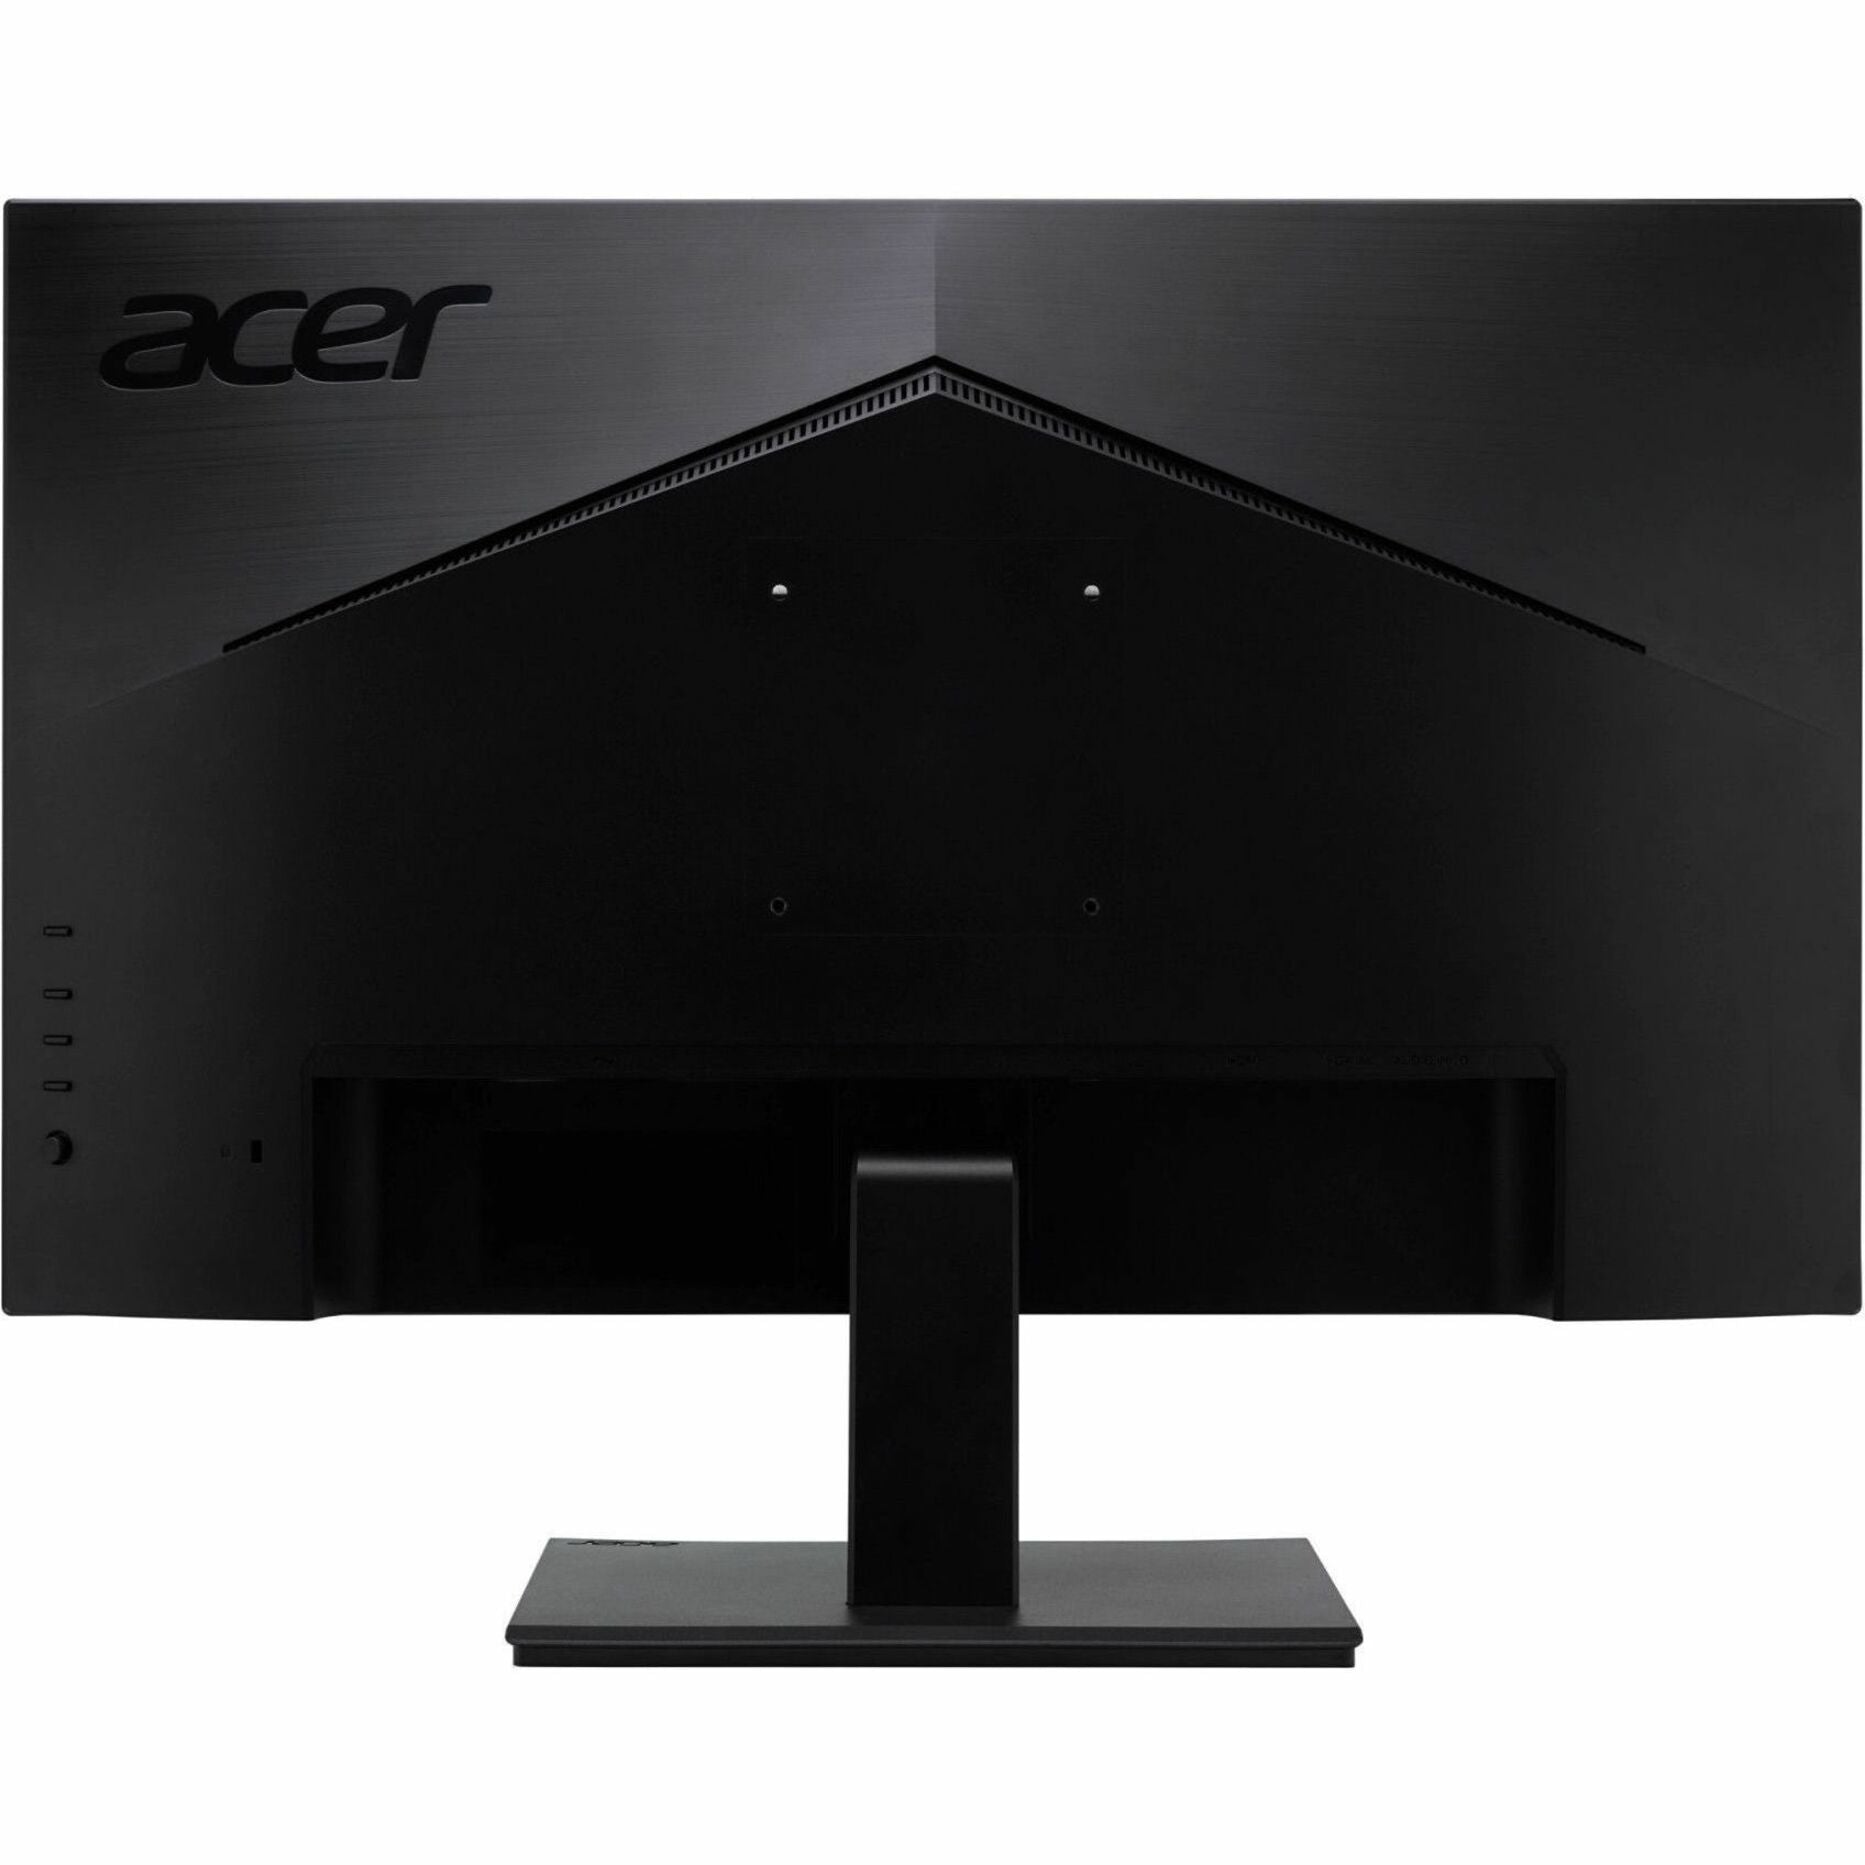 Acer UM.WV7AA.H01 Vero V7 V227Q H Widescreen LED Monitor, 21.5", 4ms GTG, 250 Nit, FreeSync